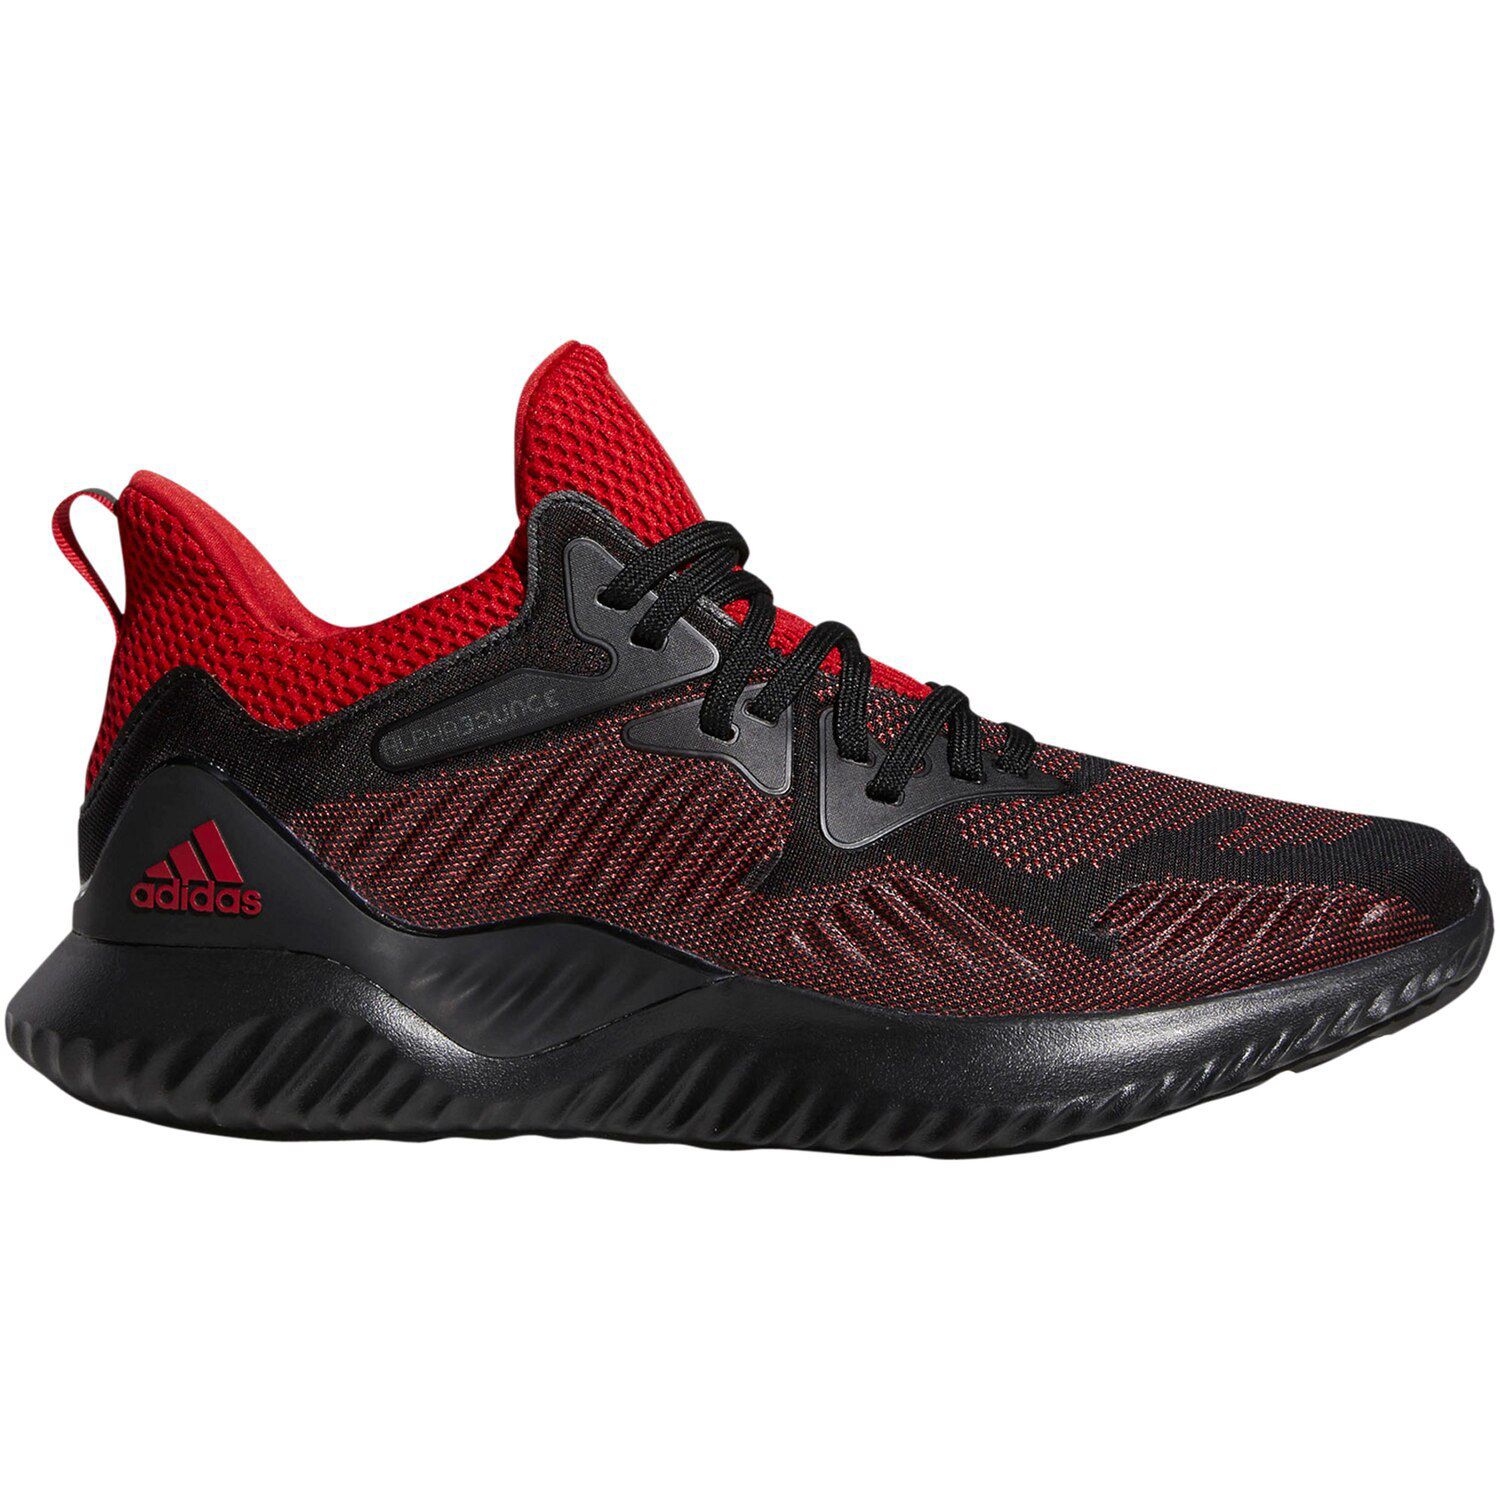 Men's adidas Black/Red Louisville 